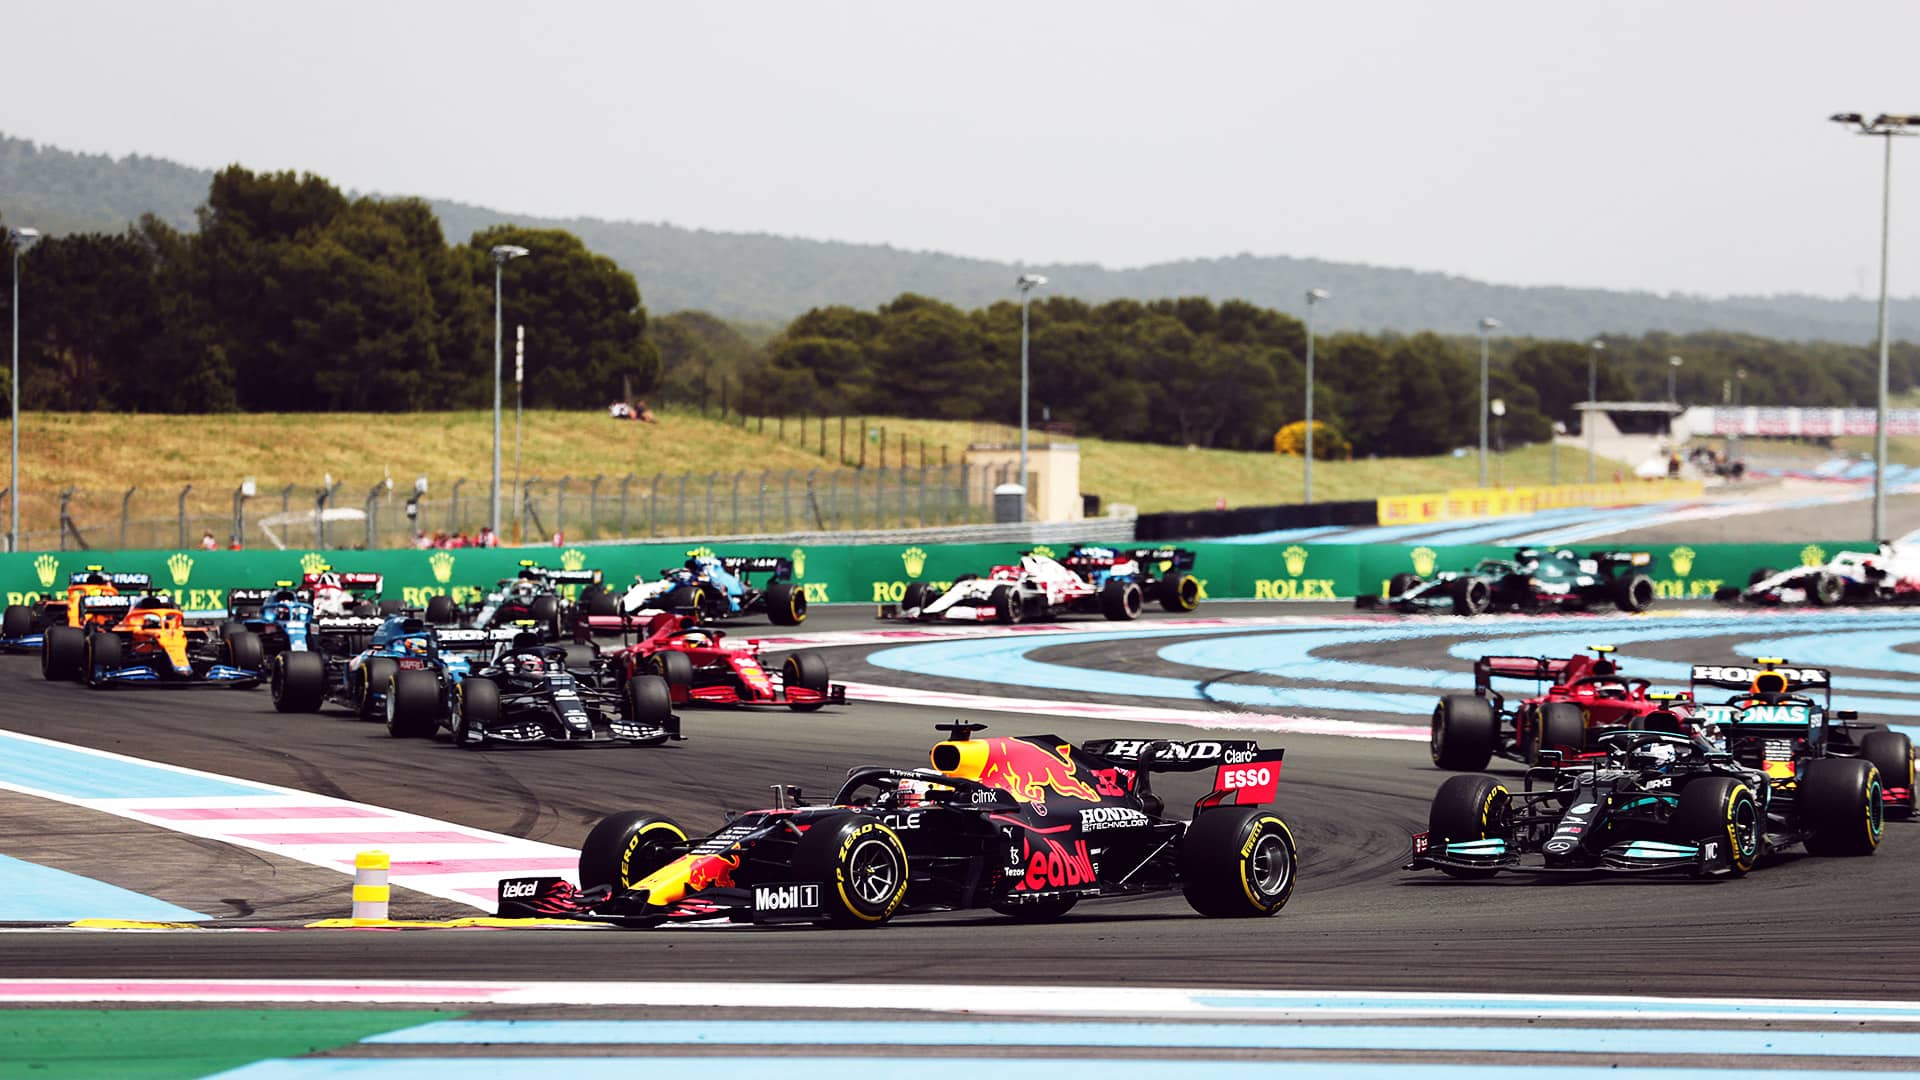 French Grand Prix 2021